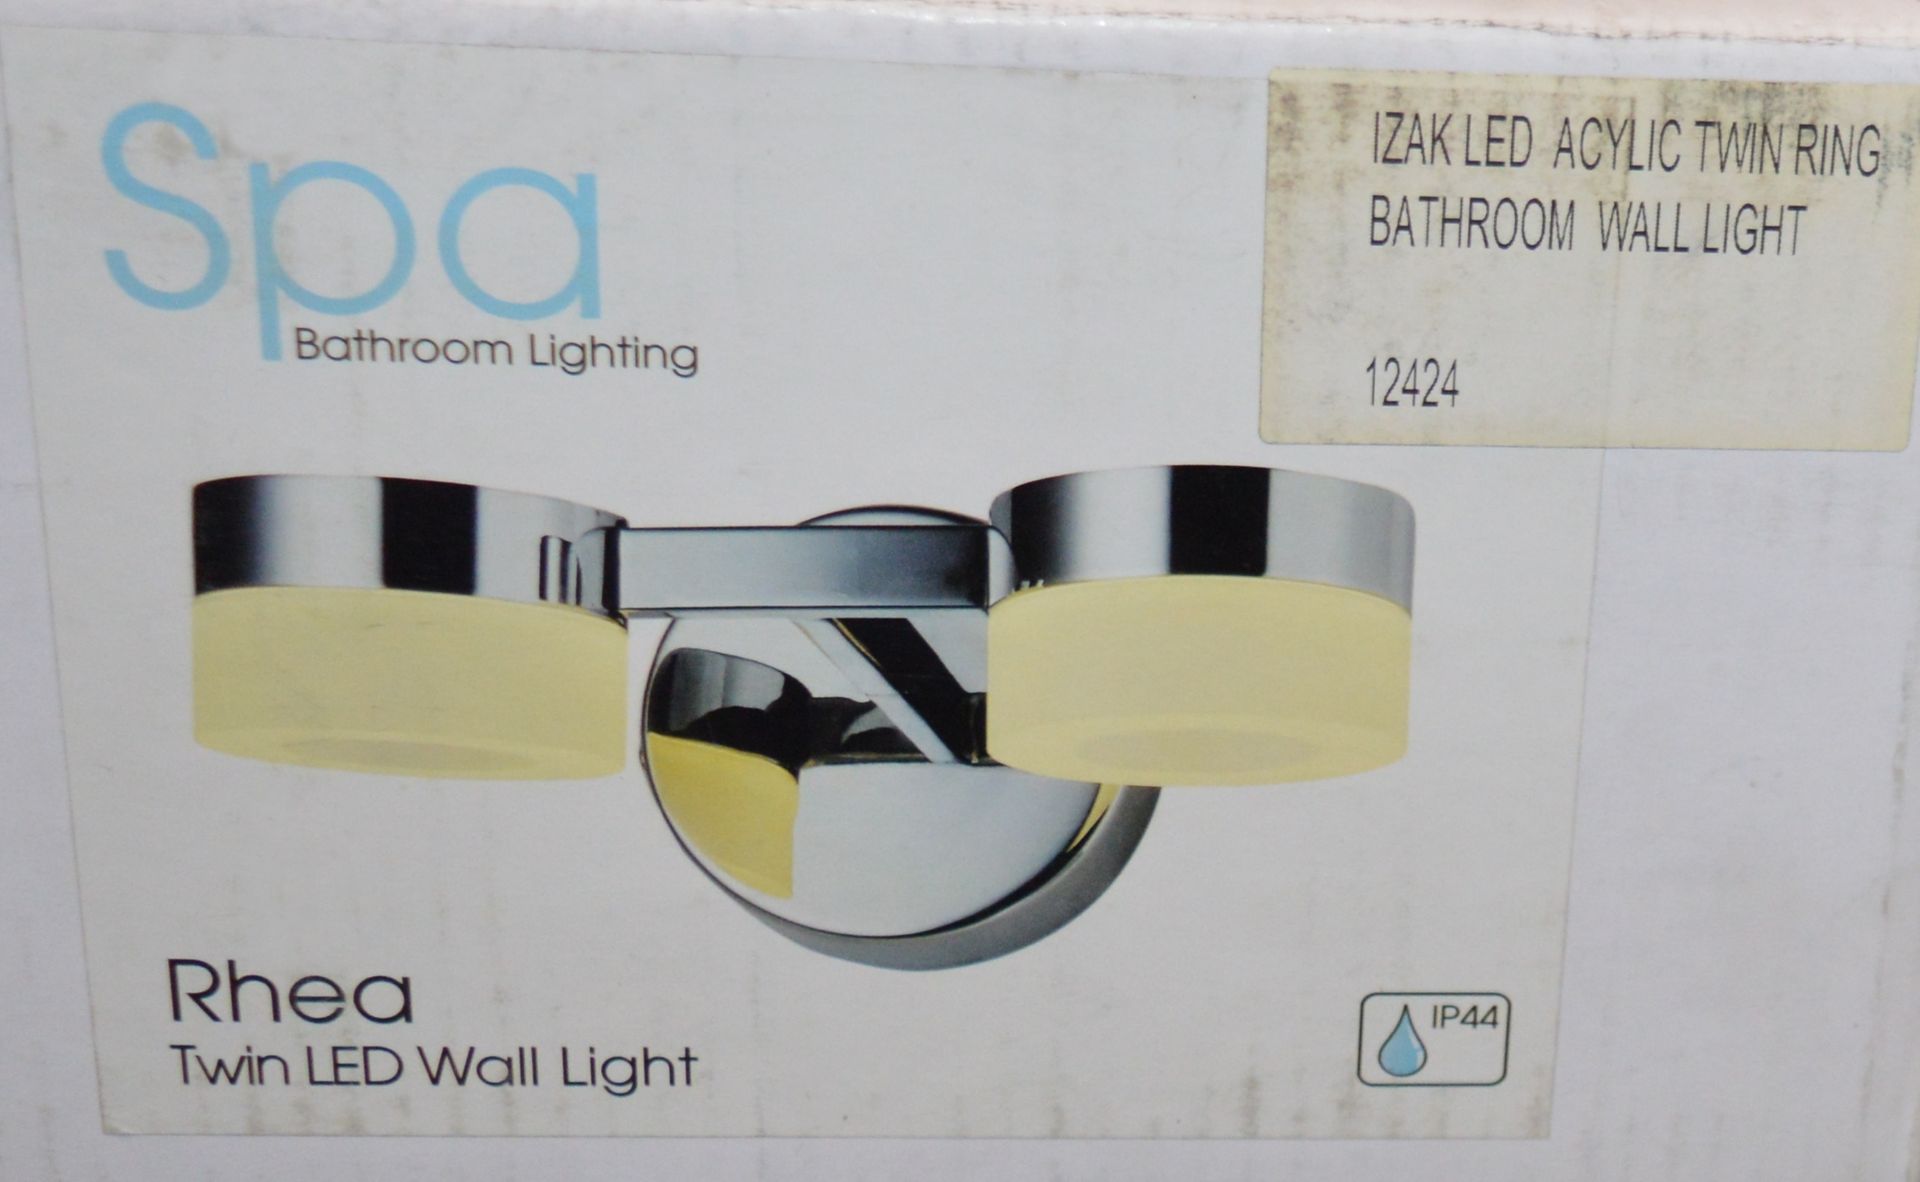 2 x Spa Bathroom Lighting RHEA Twin LED Wall Lights With Acrylic Ring Shades and Chrome Finish -